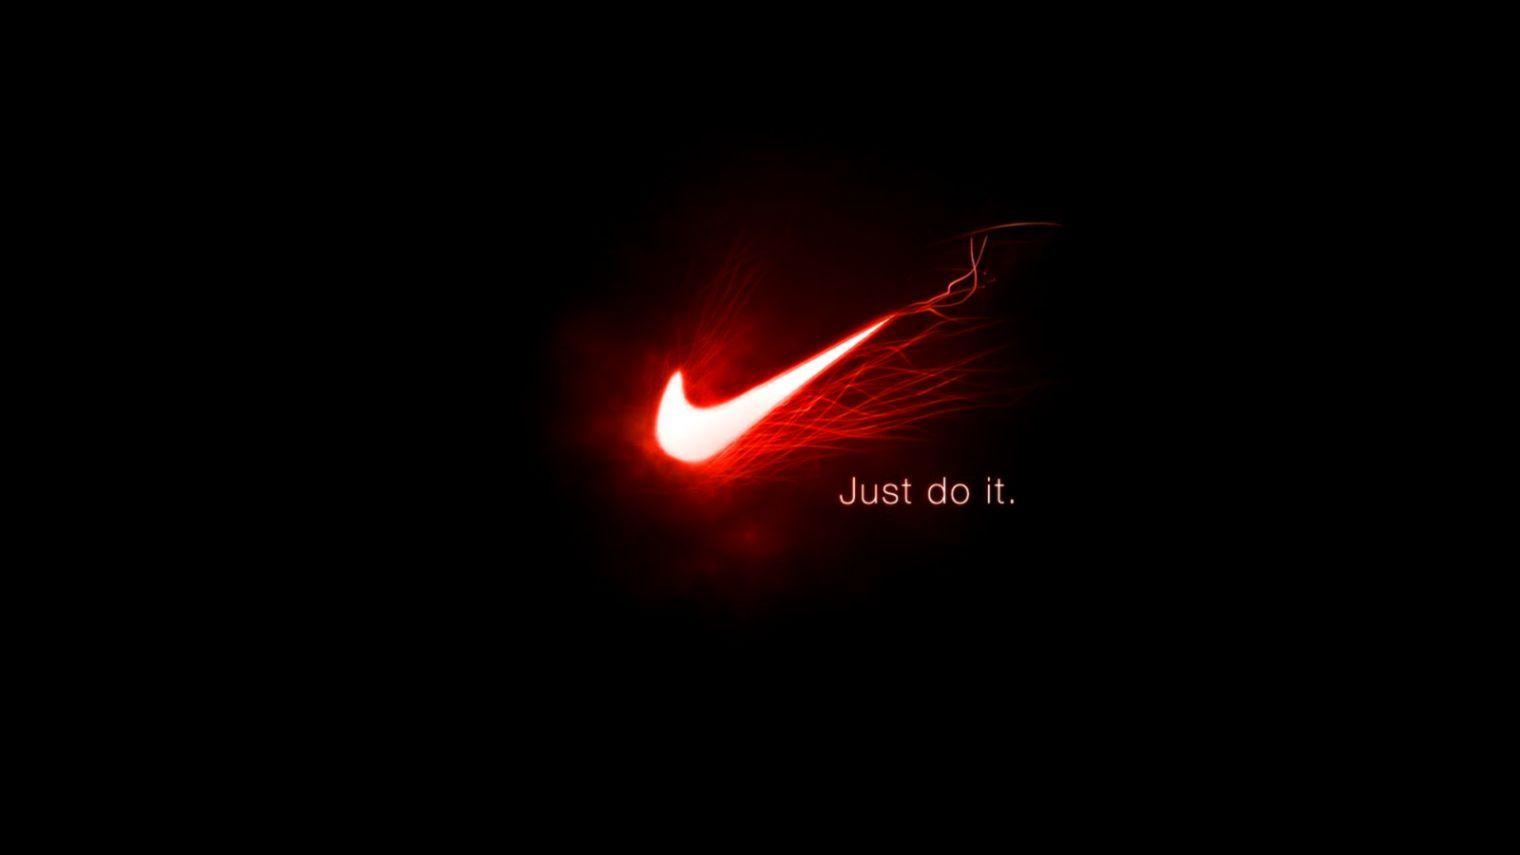 Nike Logo Fire Image Wallpaper HD. High Definitions Wallpaper